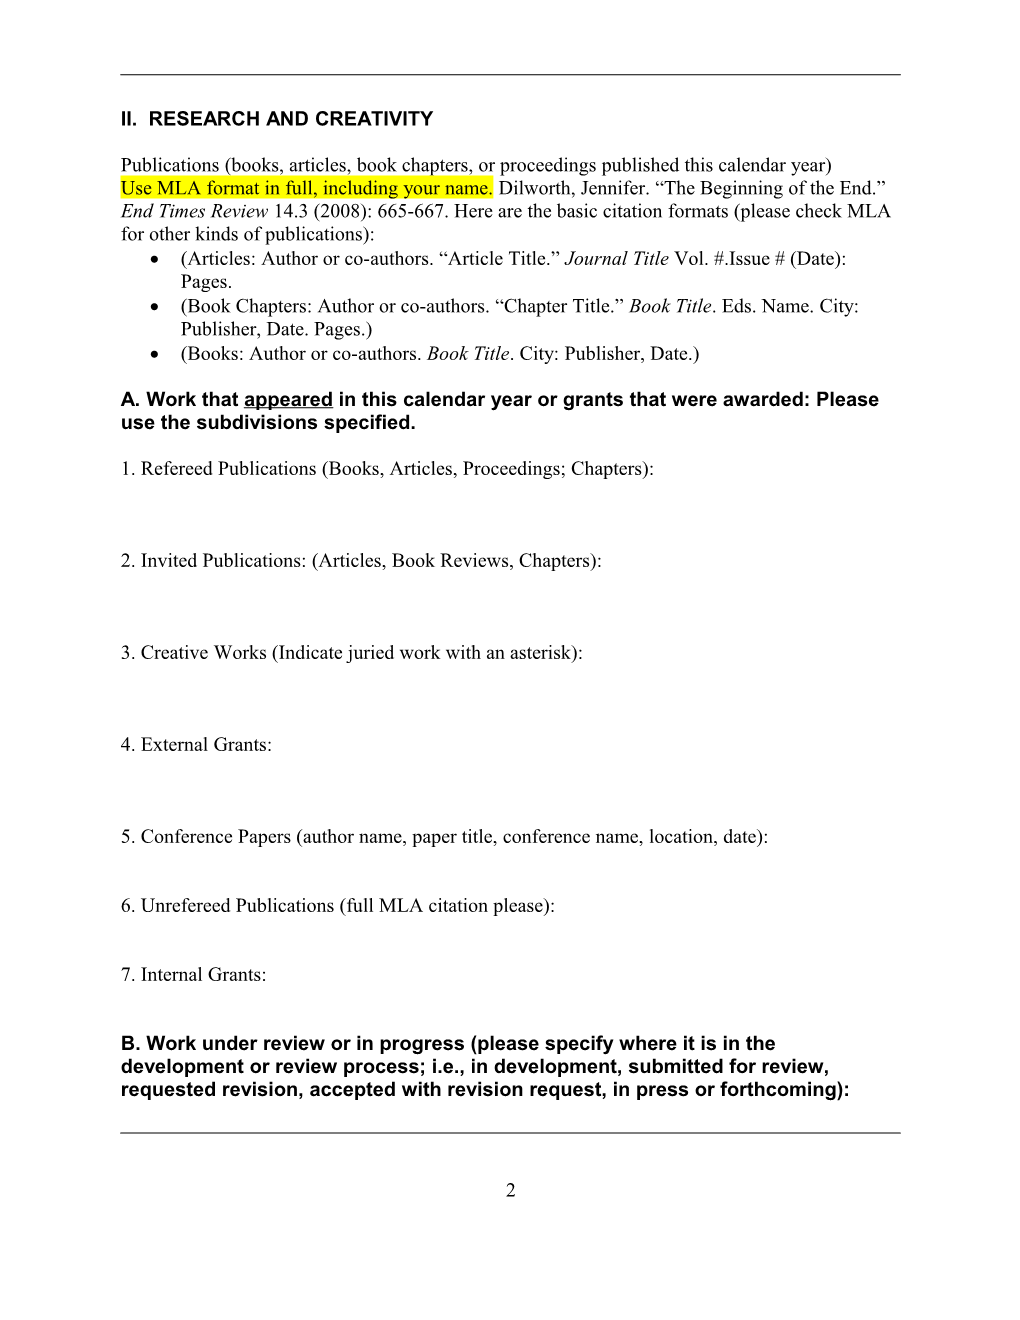 Faculty Activity Report - Calendar Year 2002